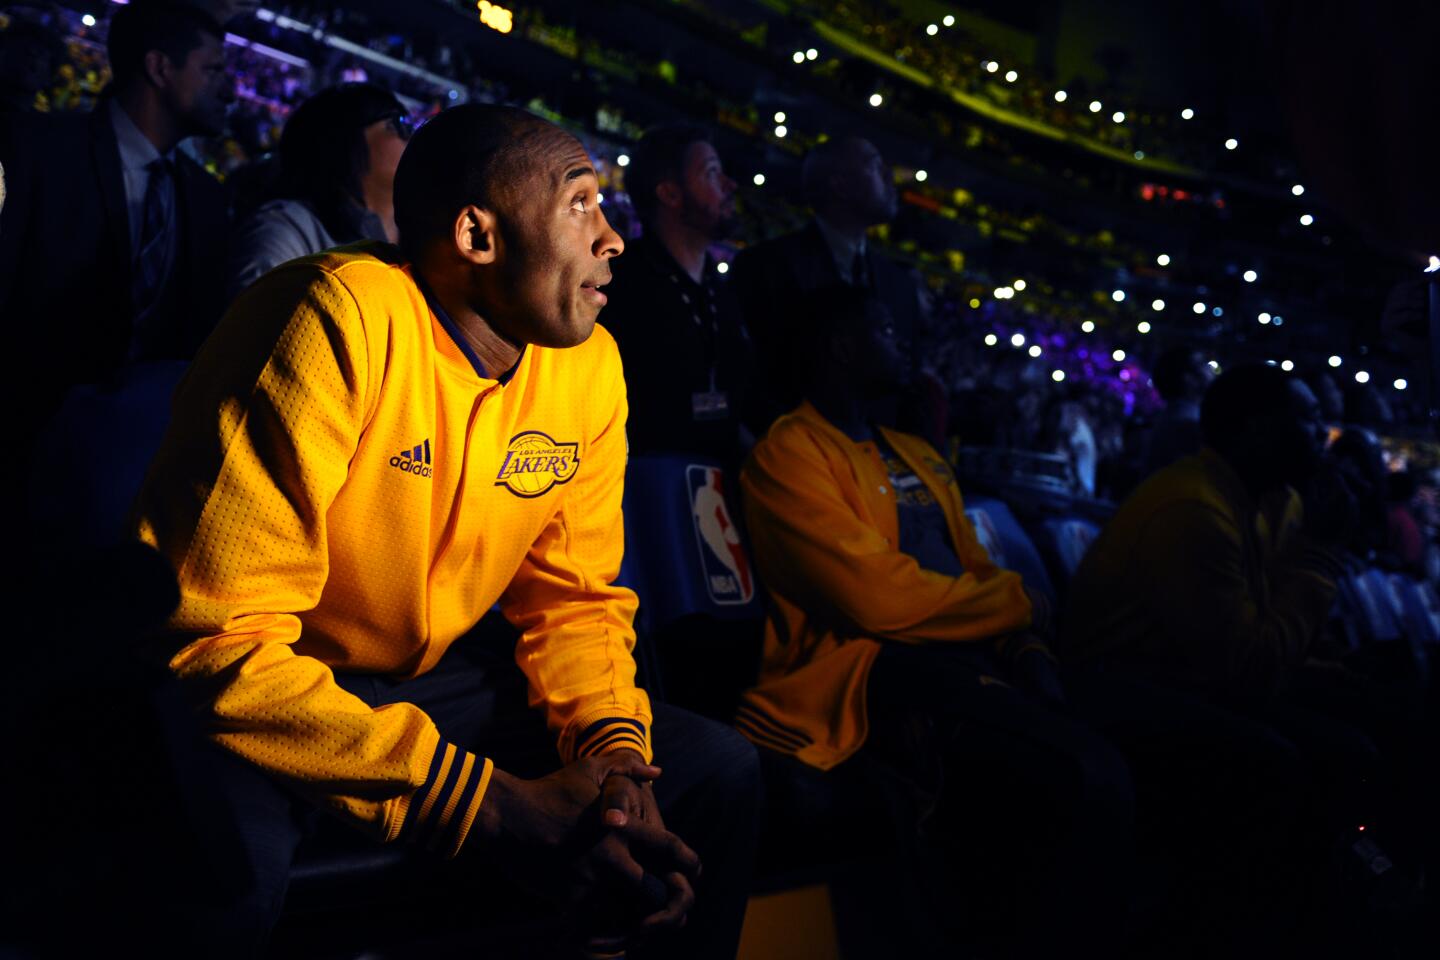 Derek Jeter focuses on Kobe Bryant's life off the court in remembrance